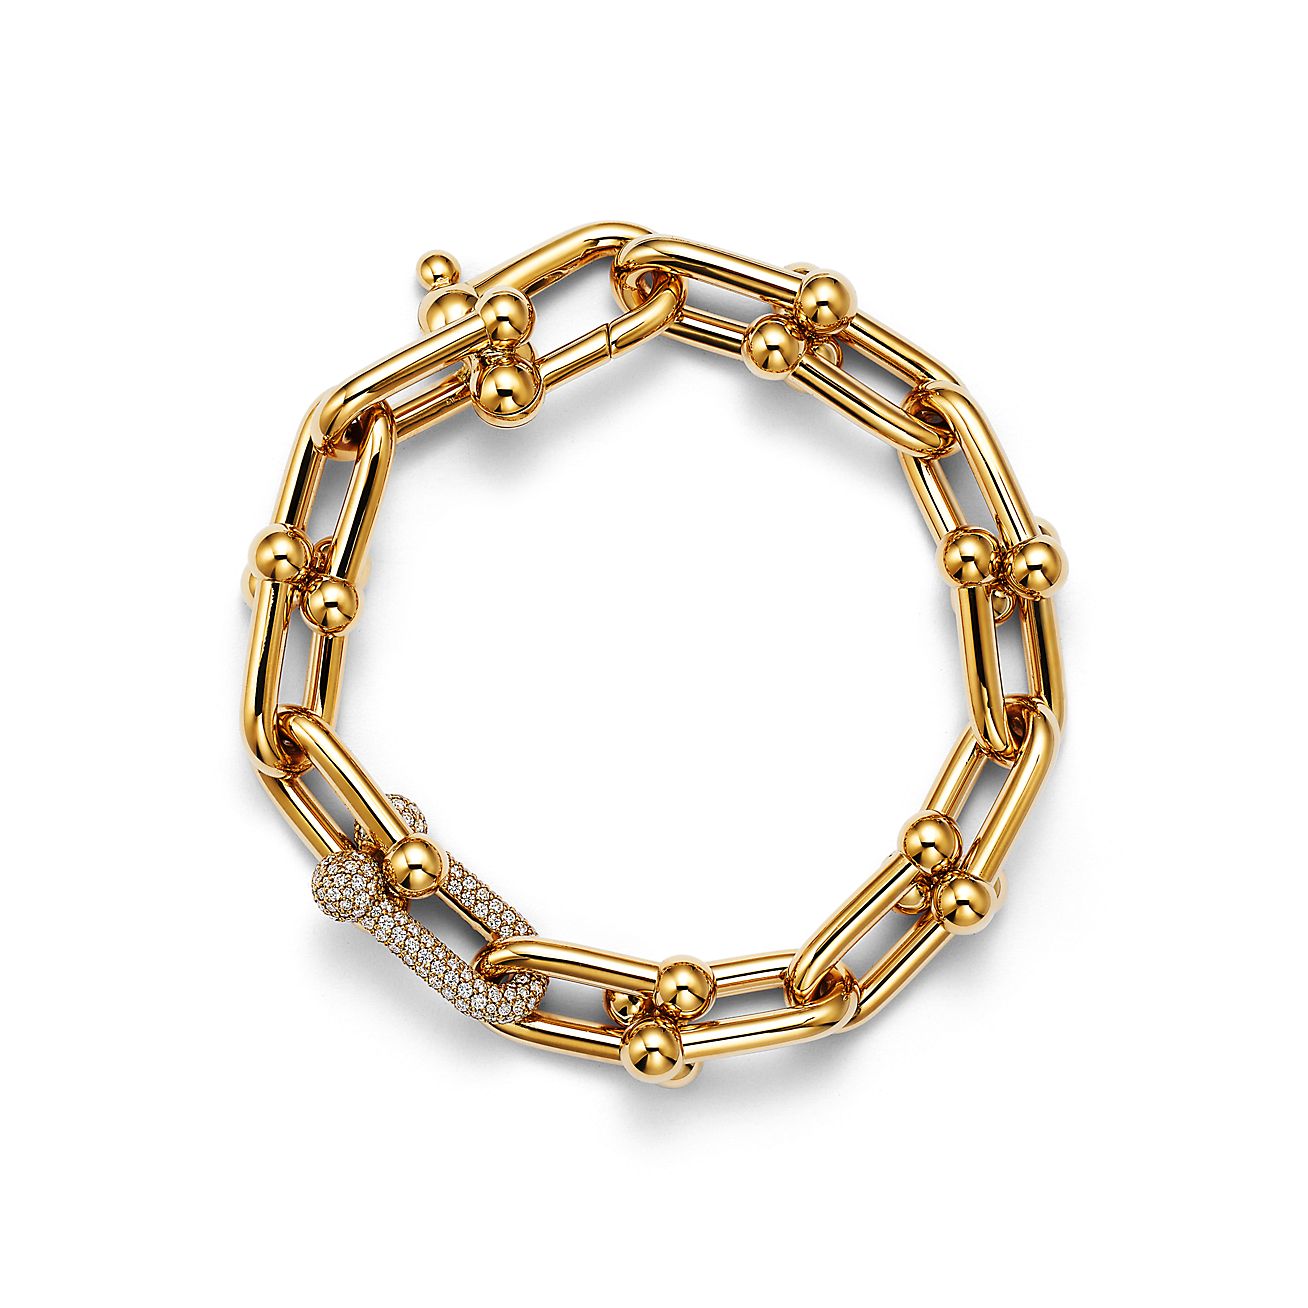 Tiffany HardWear Large Link Bracelet in Yellow Gold with Diamonds | Tiffany & Co.